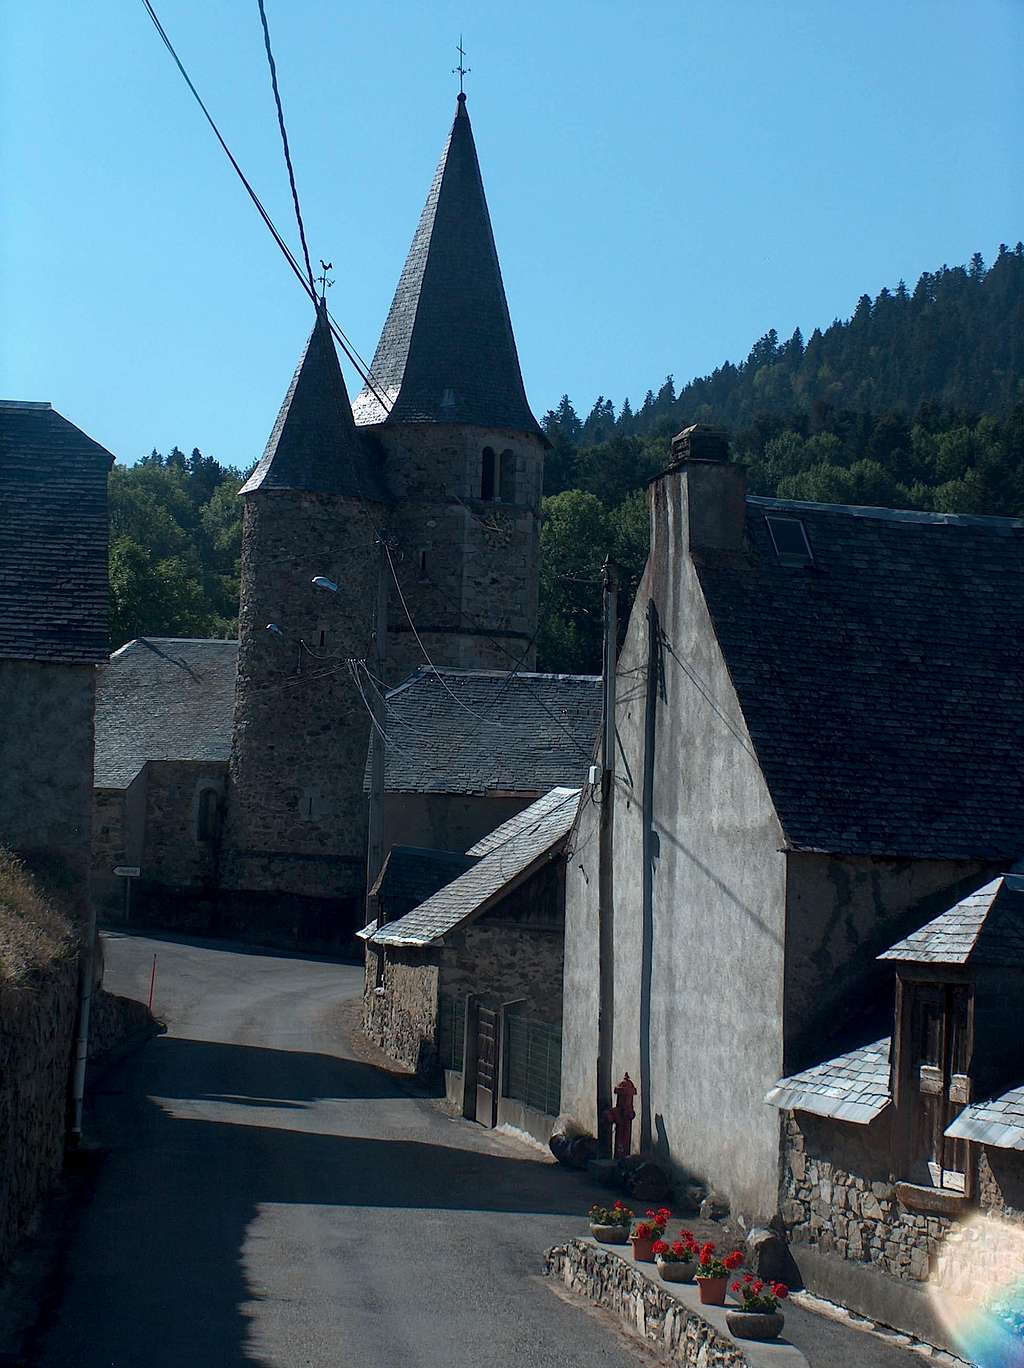 The village of Lançon